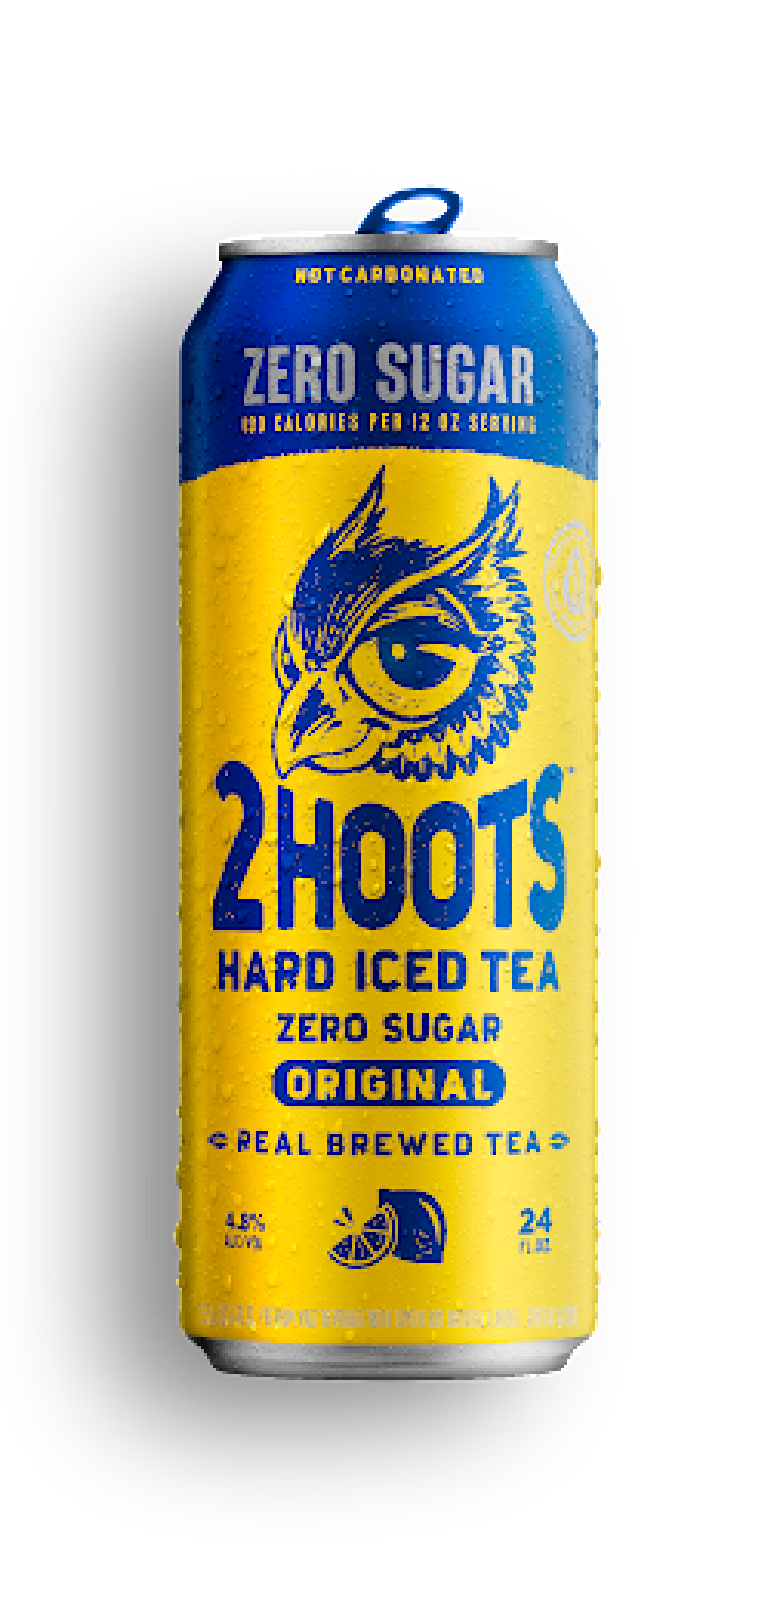 Two hoots hard tea original zero sugar